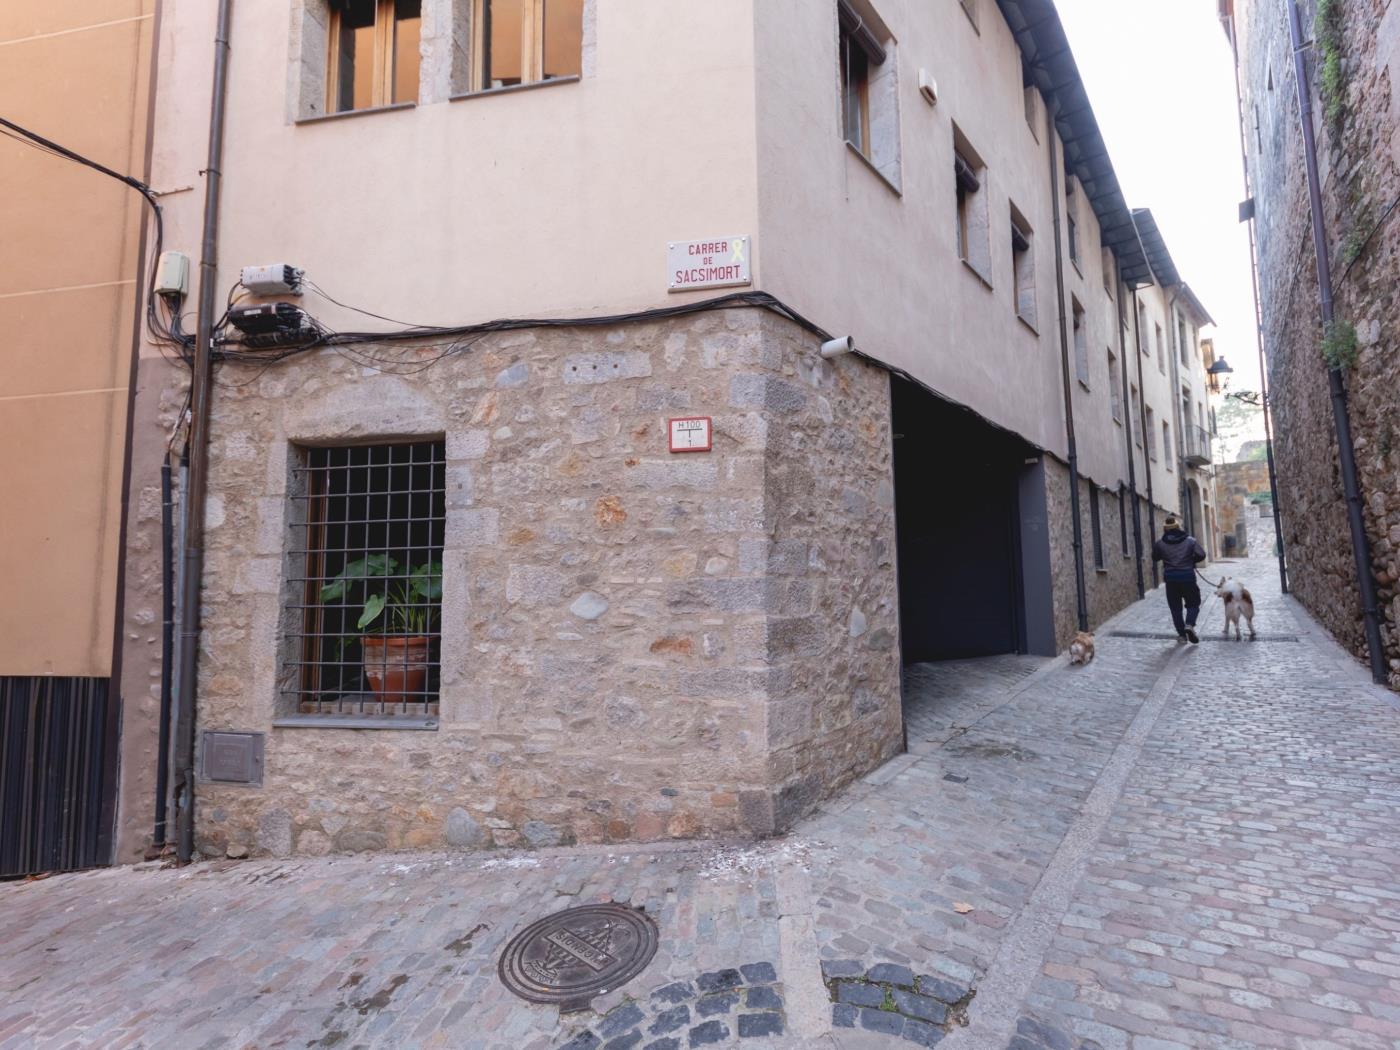 Bravissimo Sacsimort, spacious split-level apt in Girona